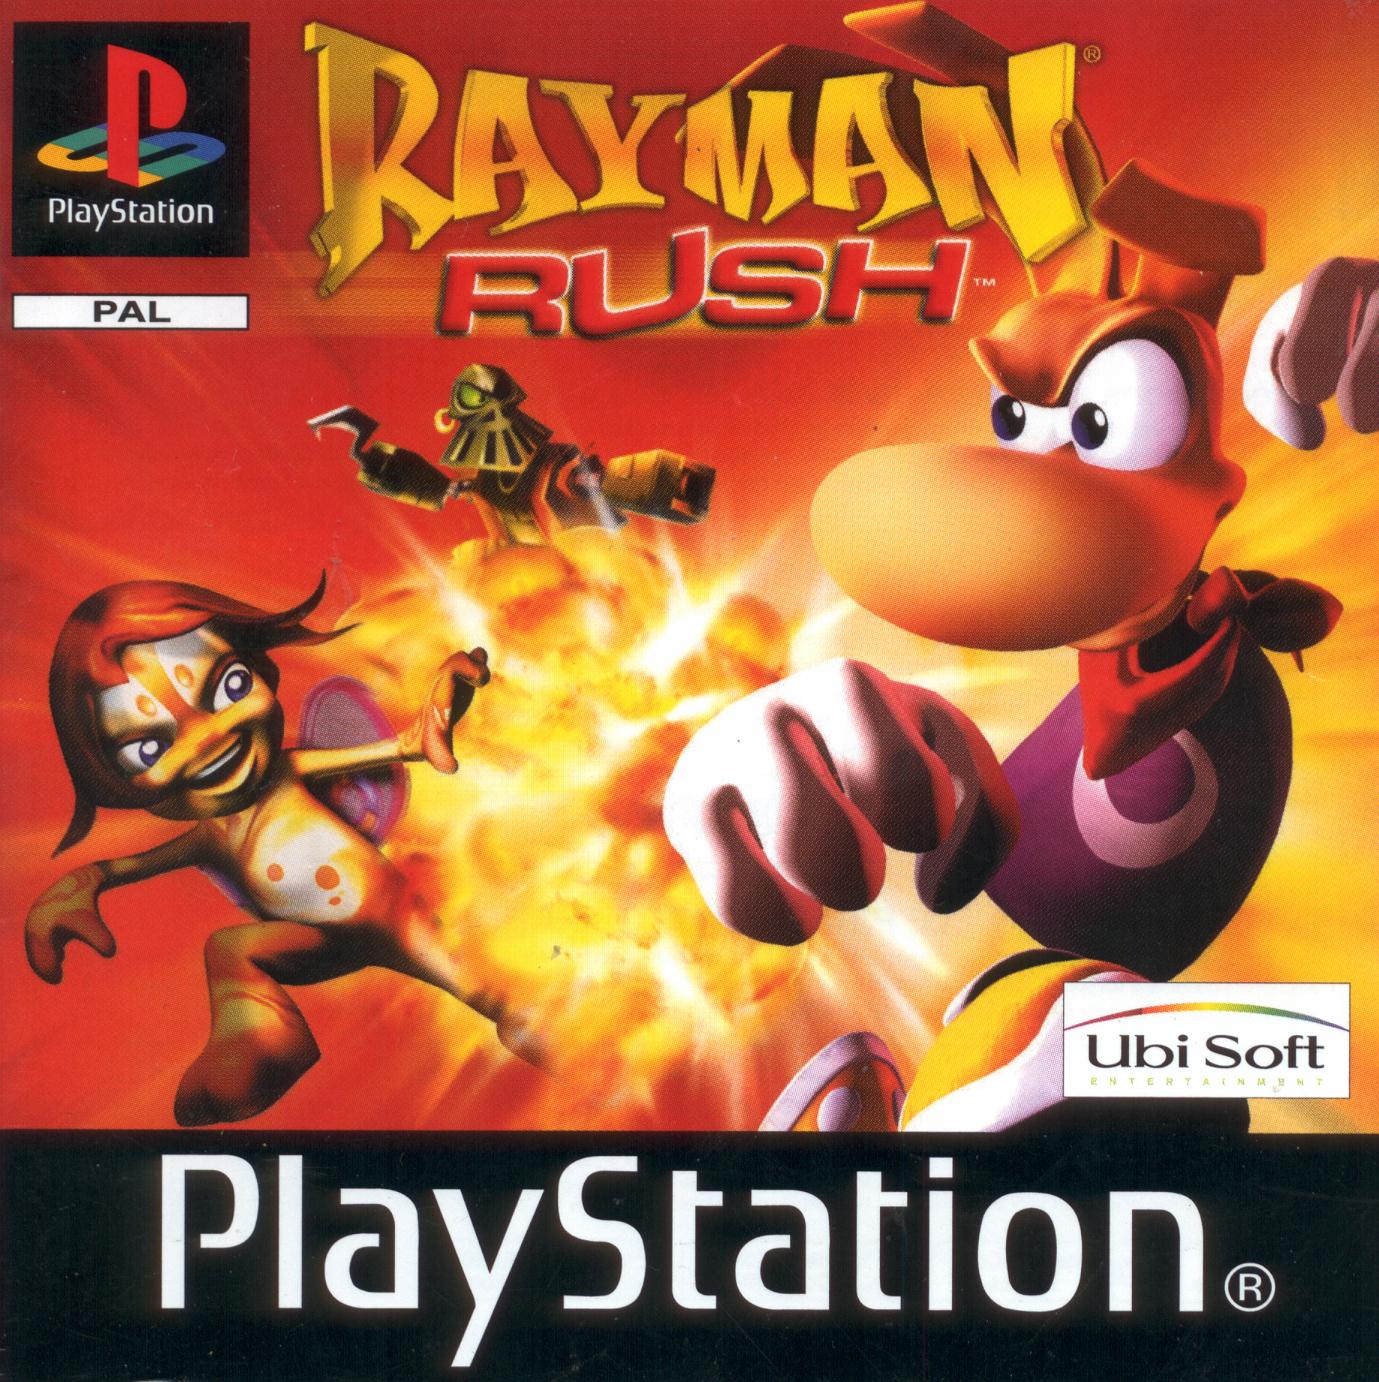 download rayman rush